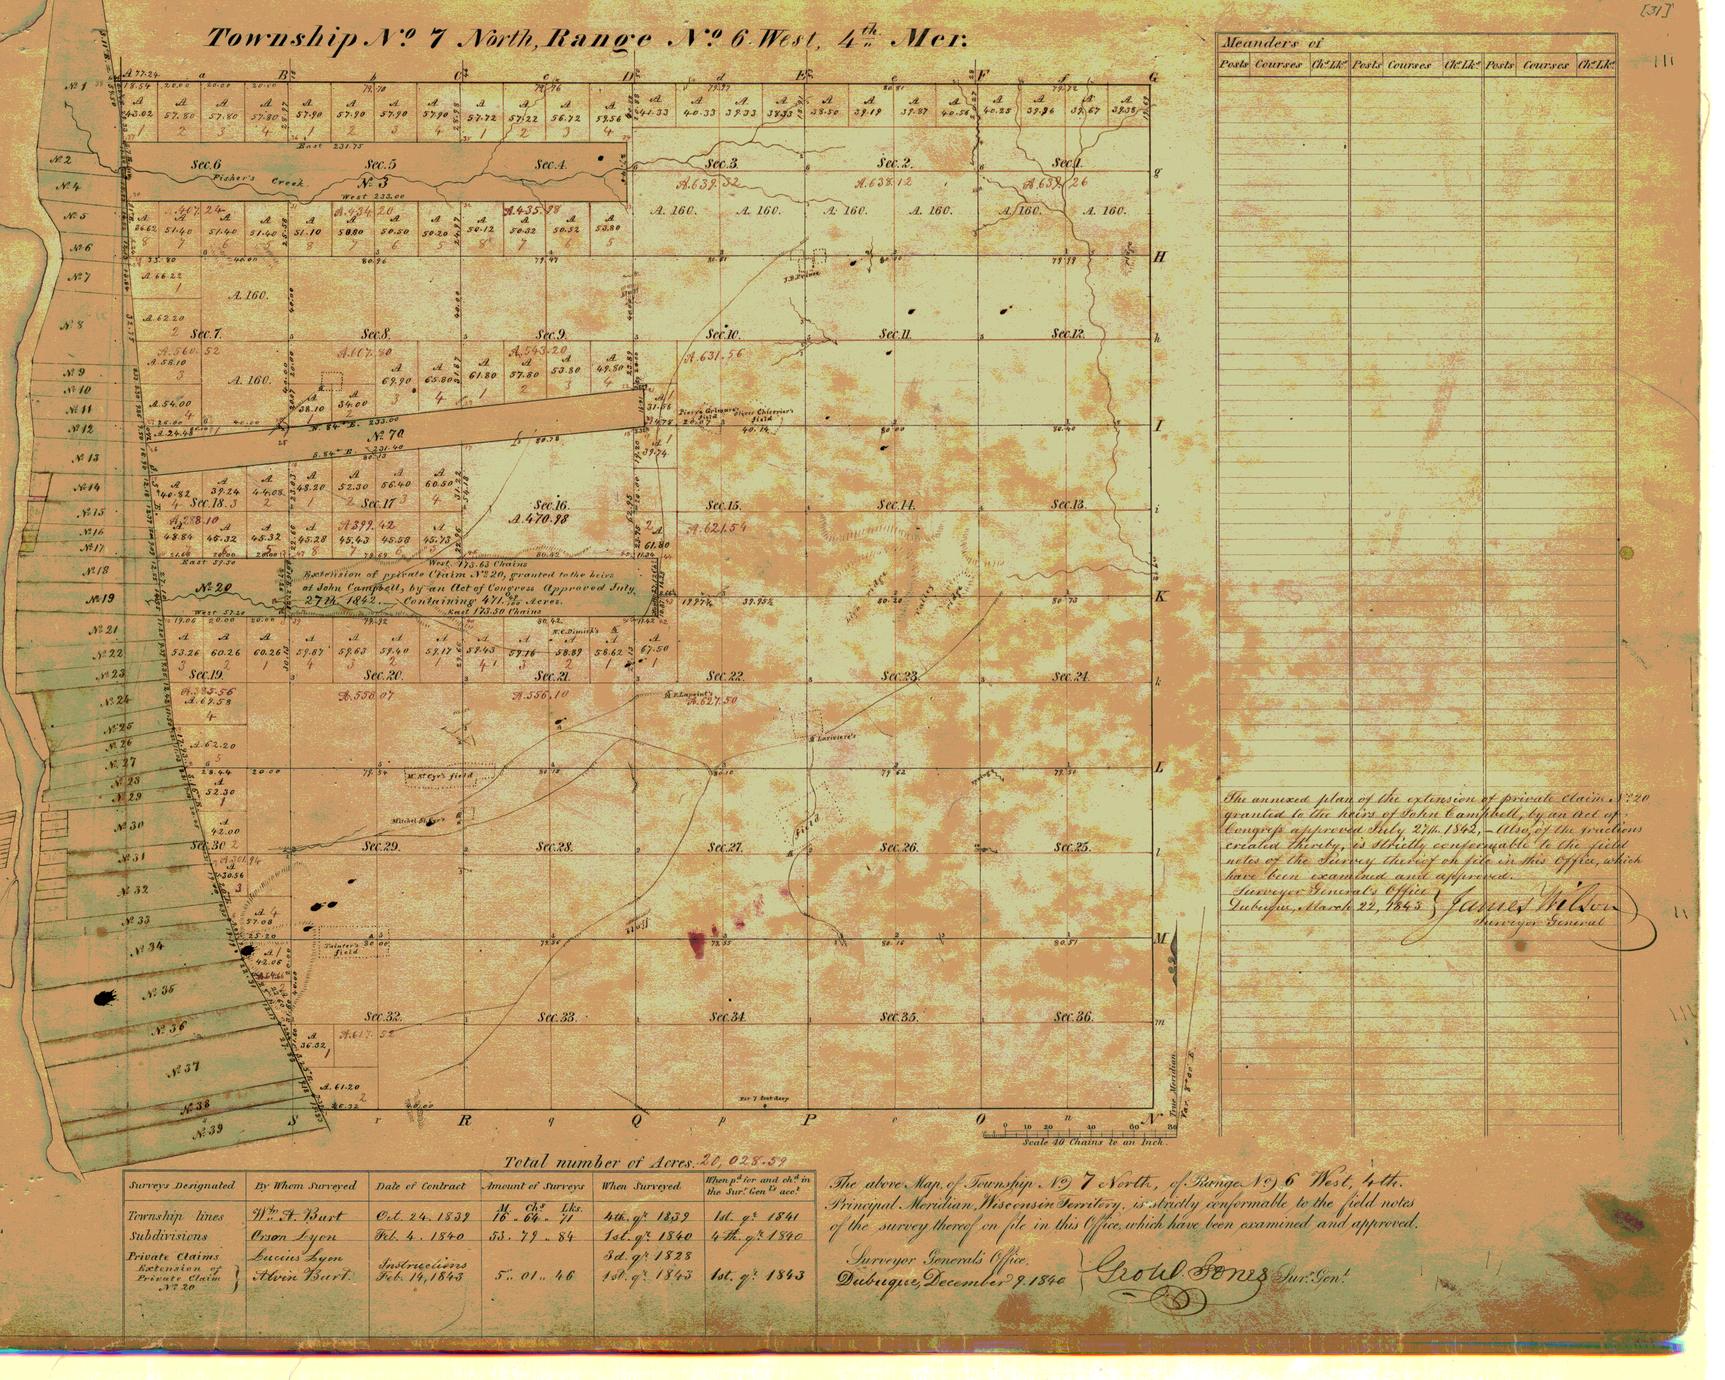 [Public Land Survey System map: Wisconsin Township 07 North, Range 06 West]